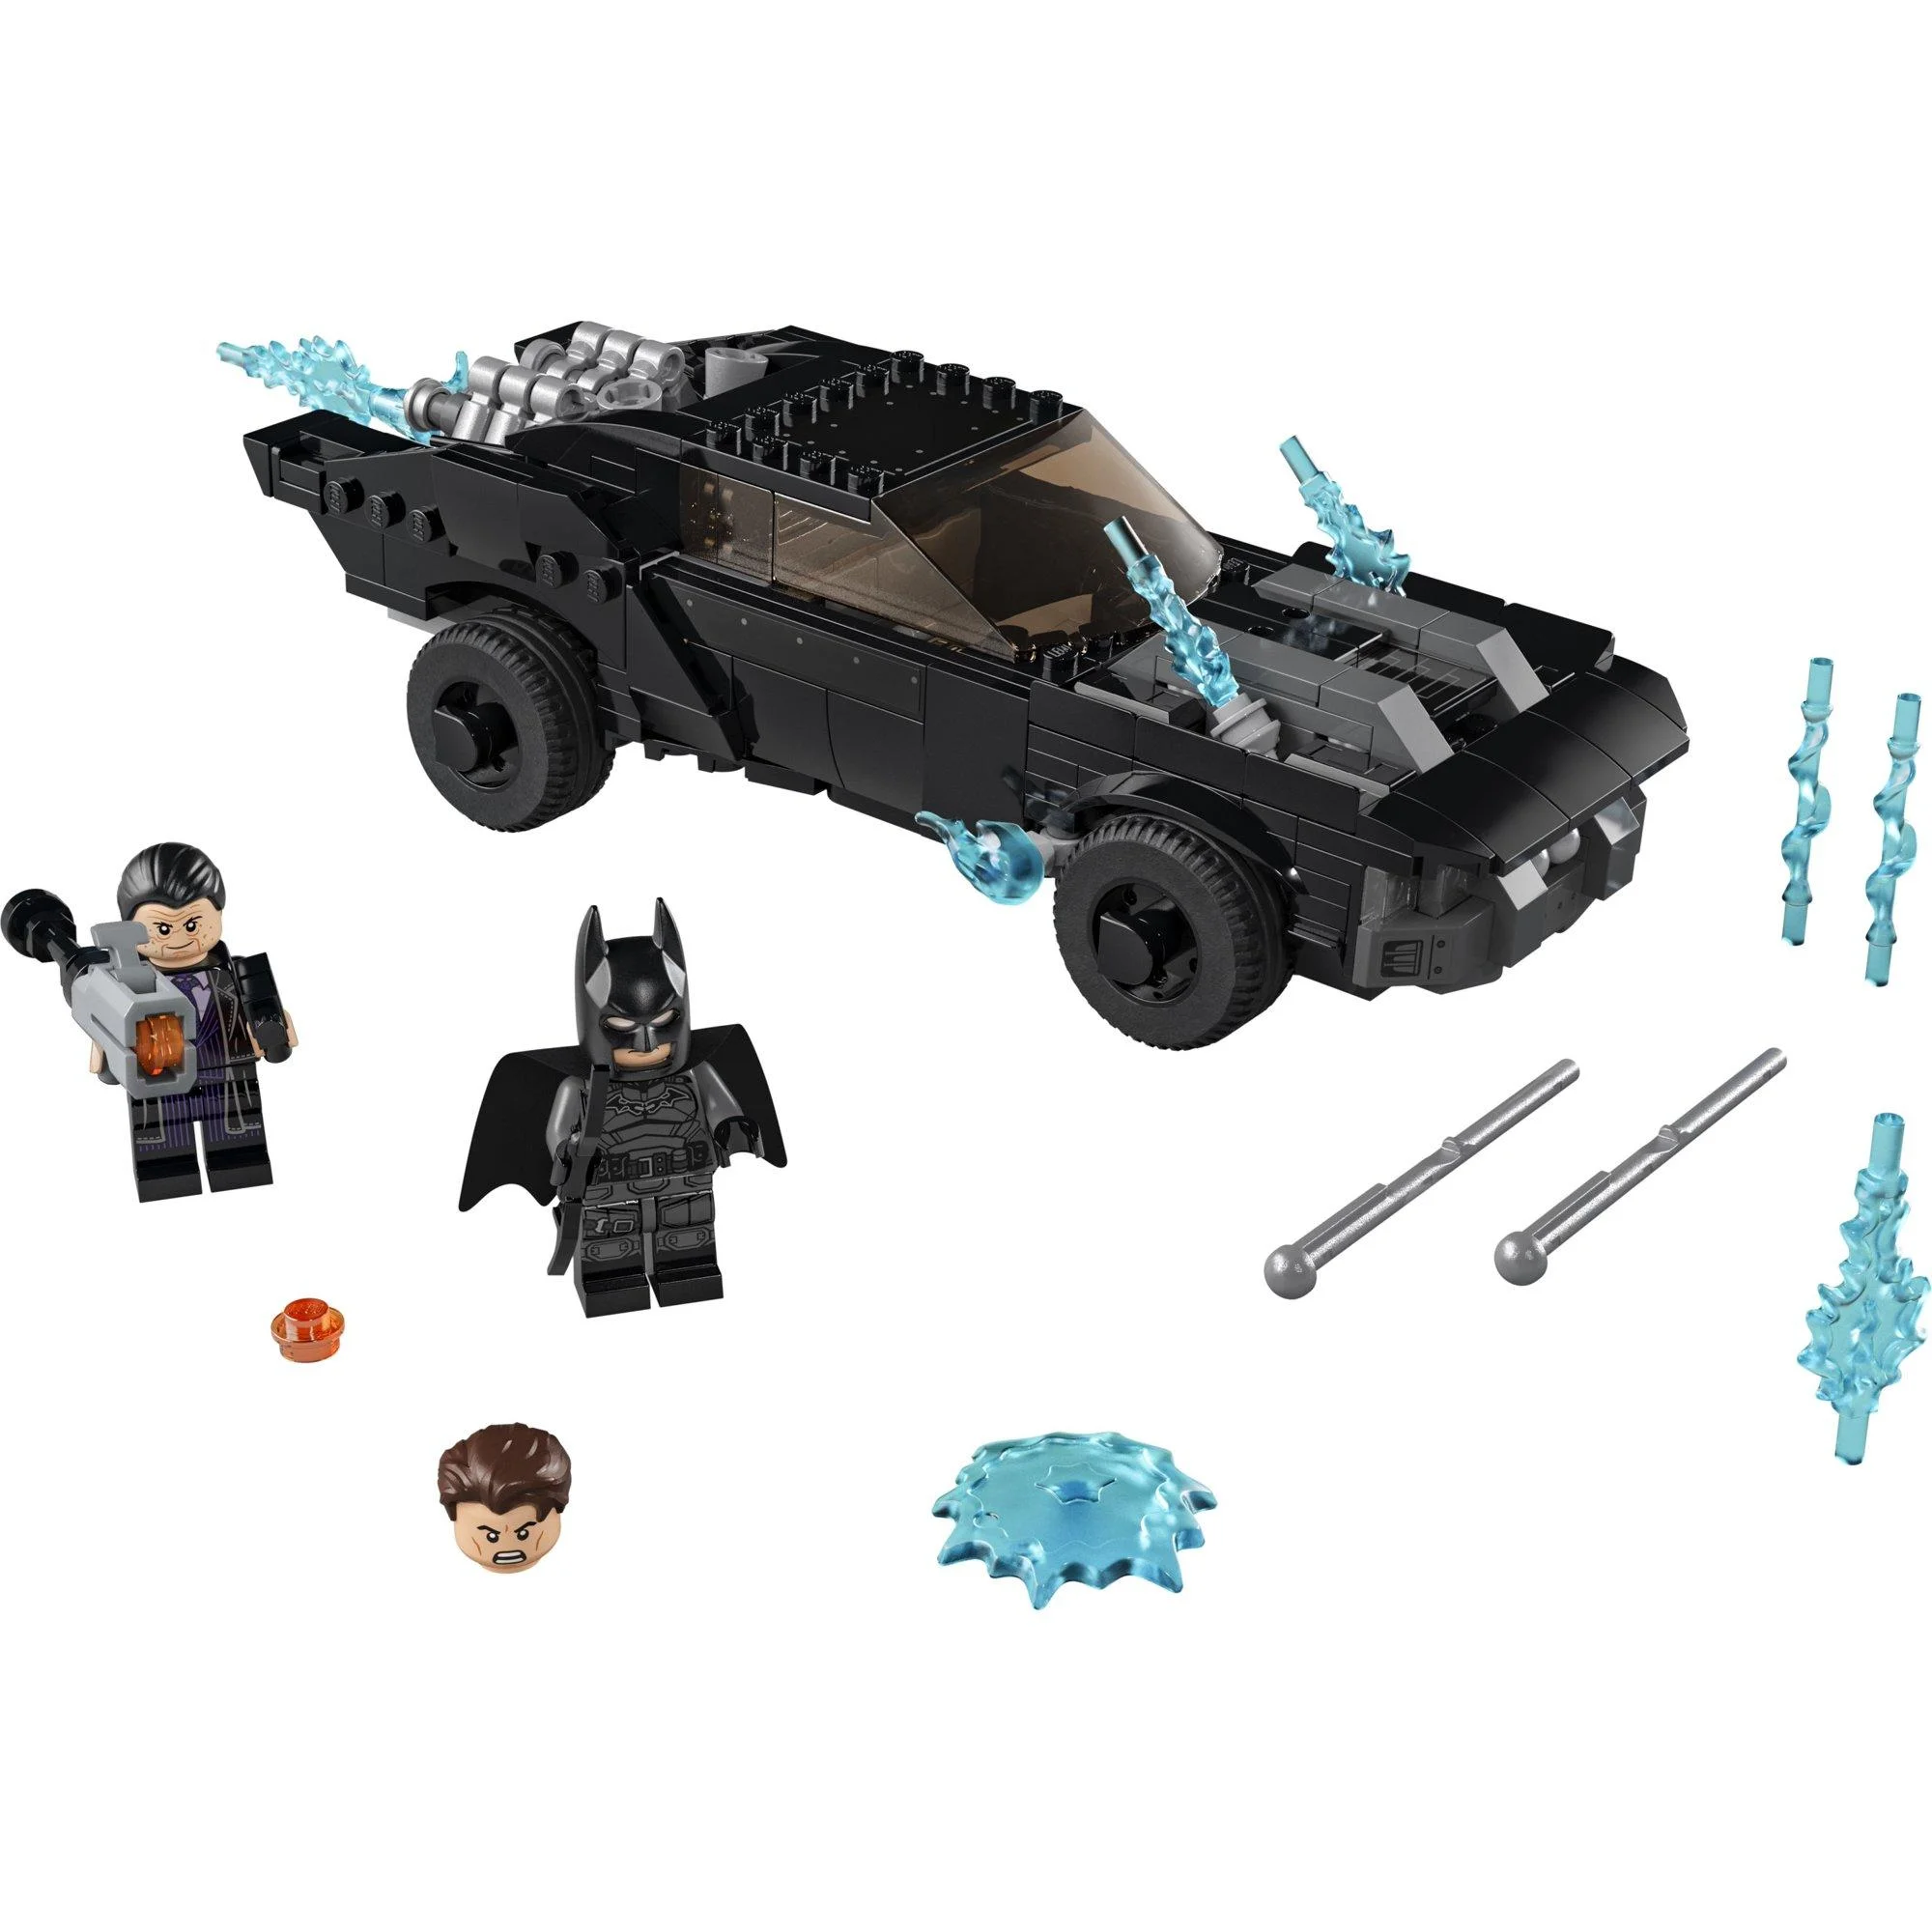 LEGO запустила предзаказы на наборы по «Бэтмену» Мэтта Ривза - фото 3